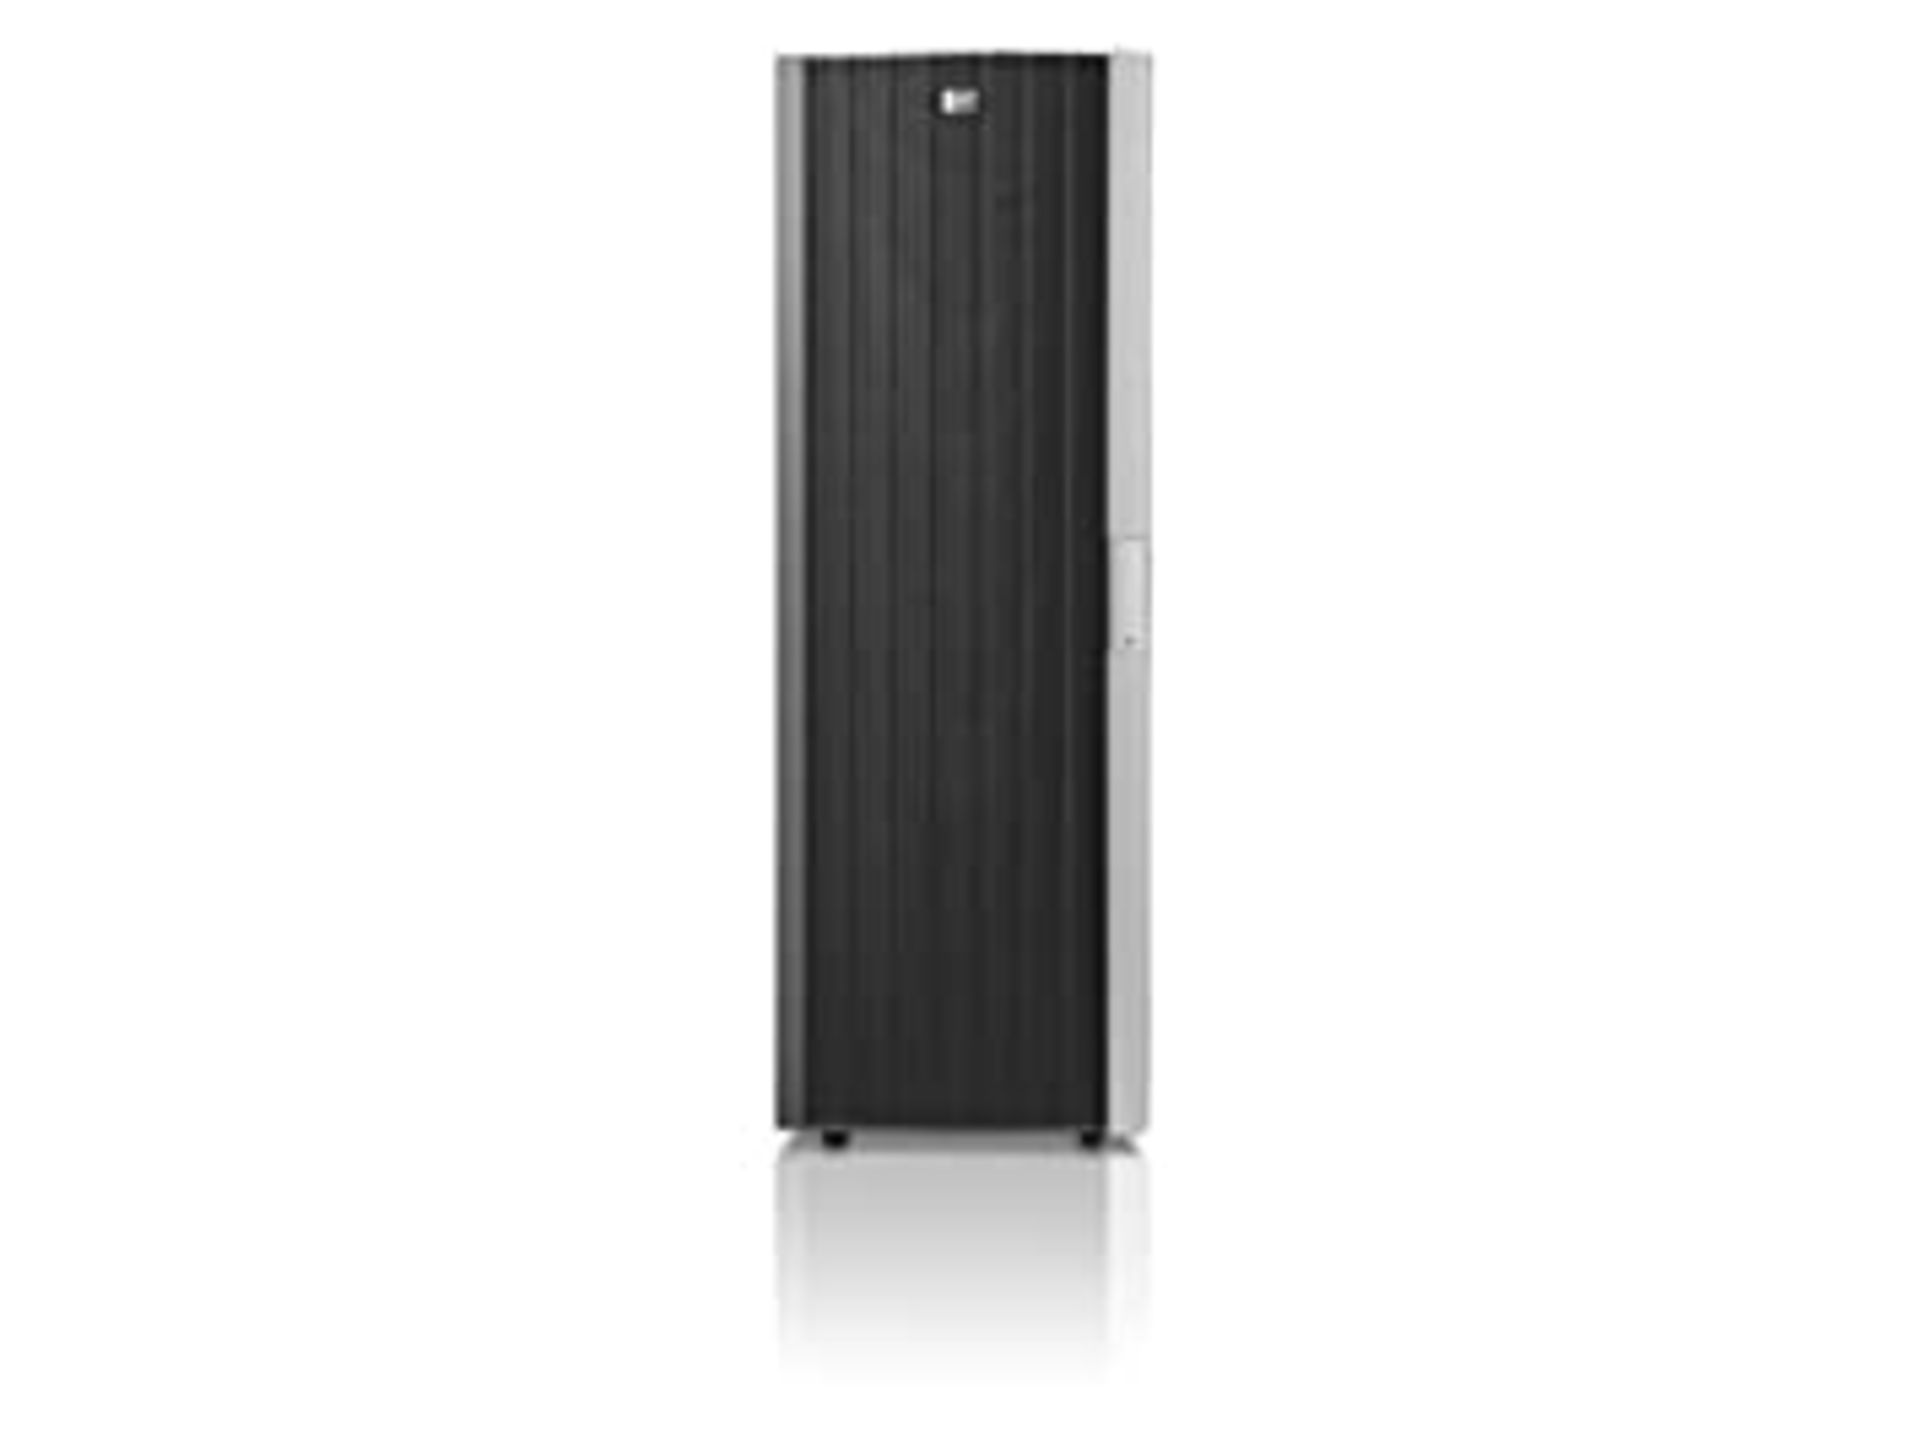 1 x Hewlett Packard HP G2 Shock Universal Server Rack Enclosure - Dimensions: H164 x W60 x D104